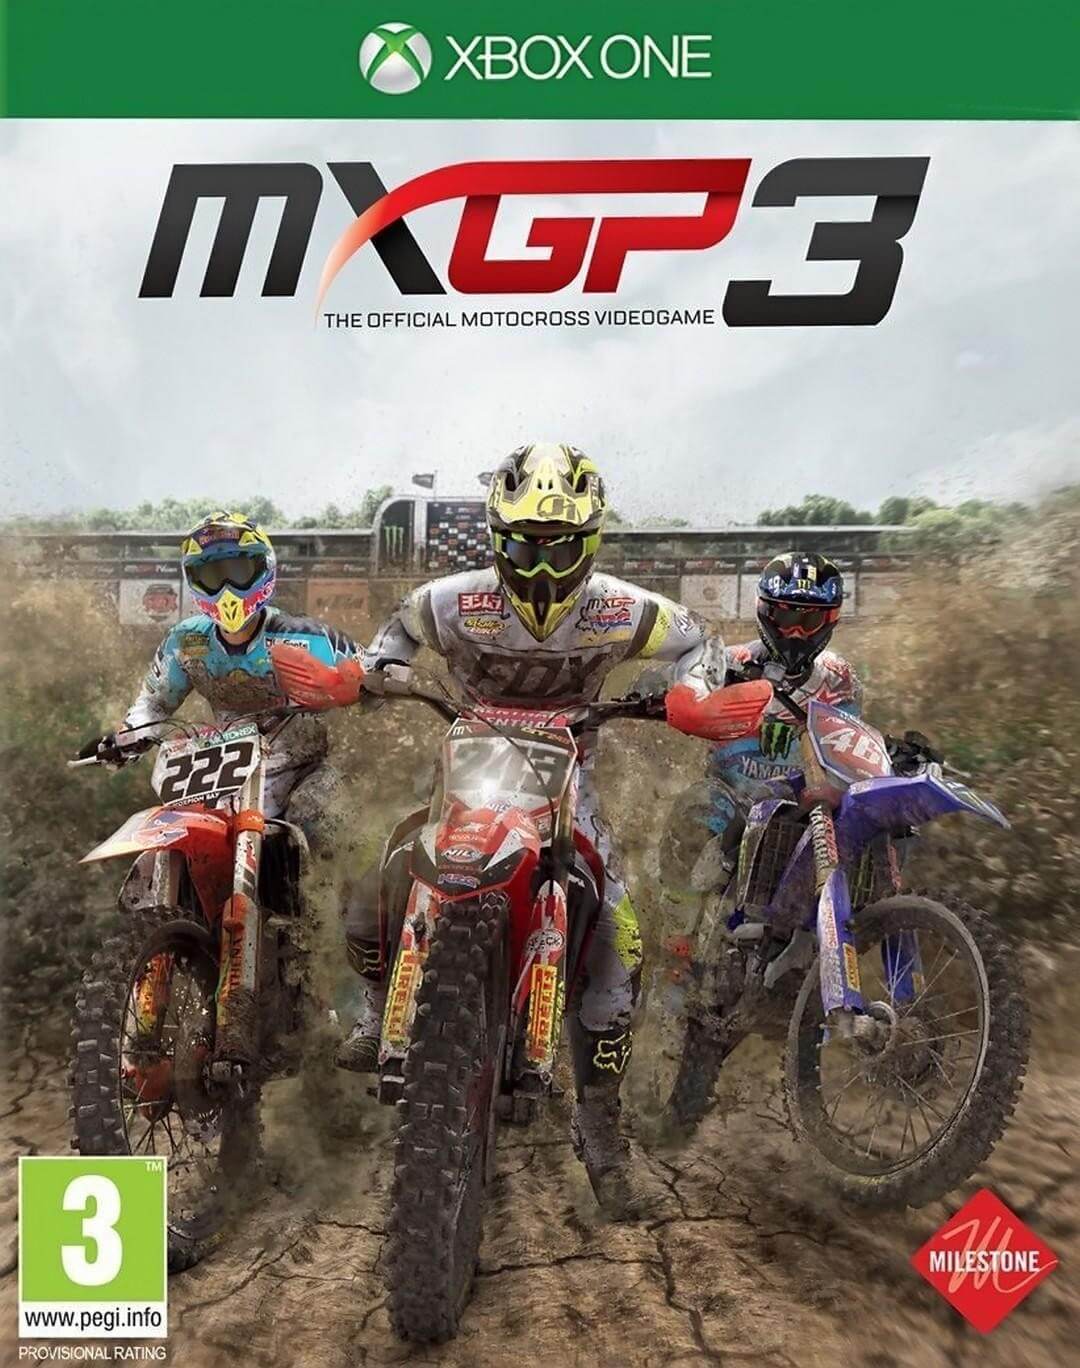 MXGP3 - The Official Motocross Videogame 